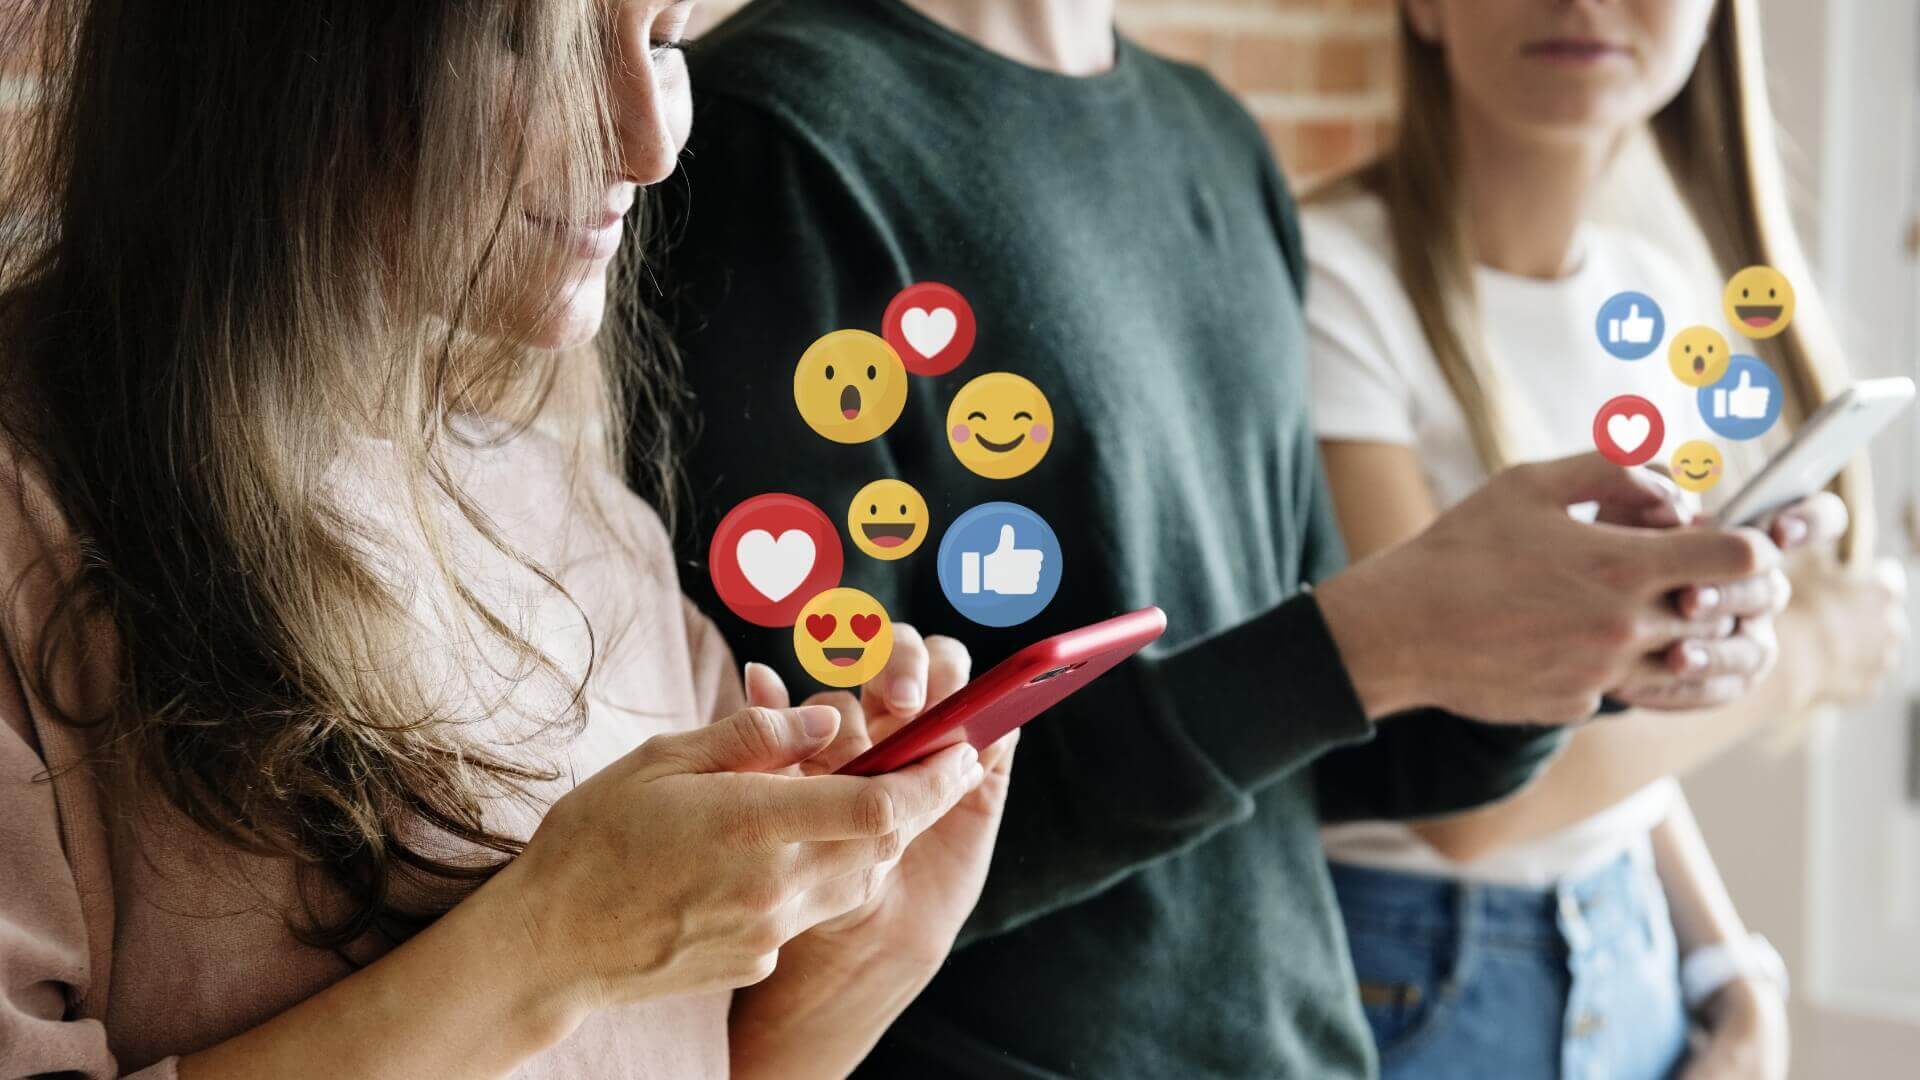 most used social media 2022